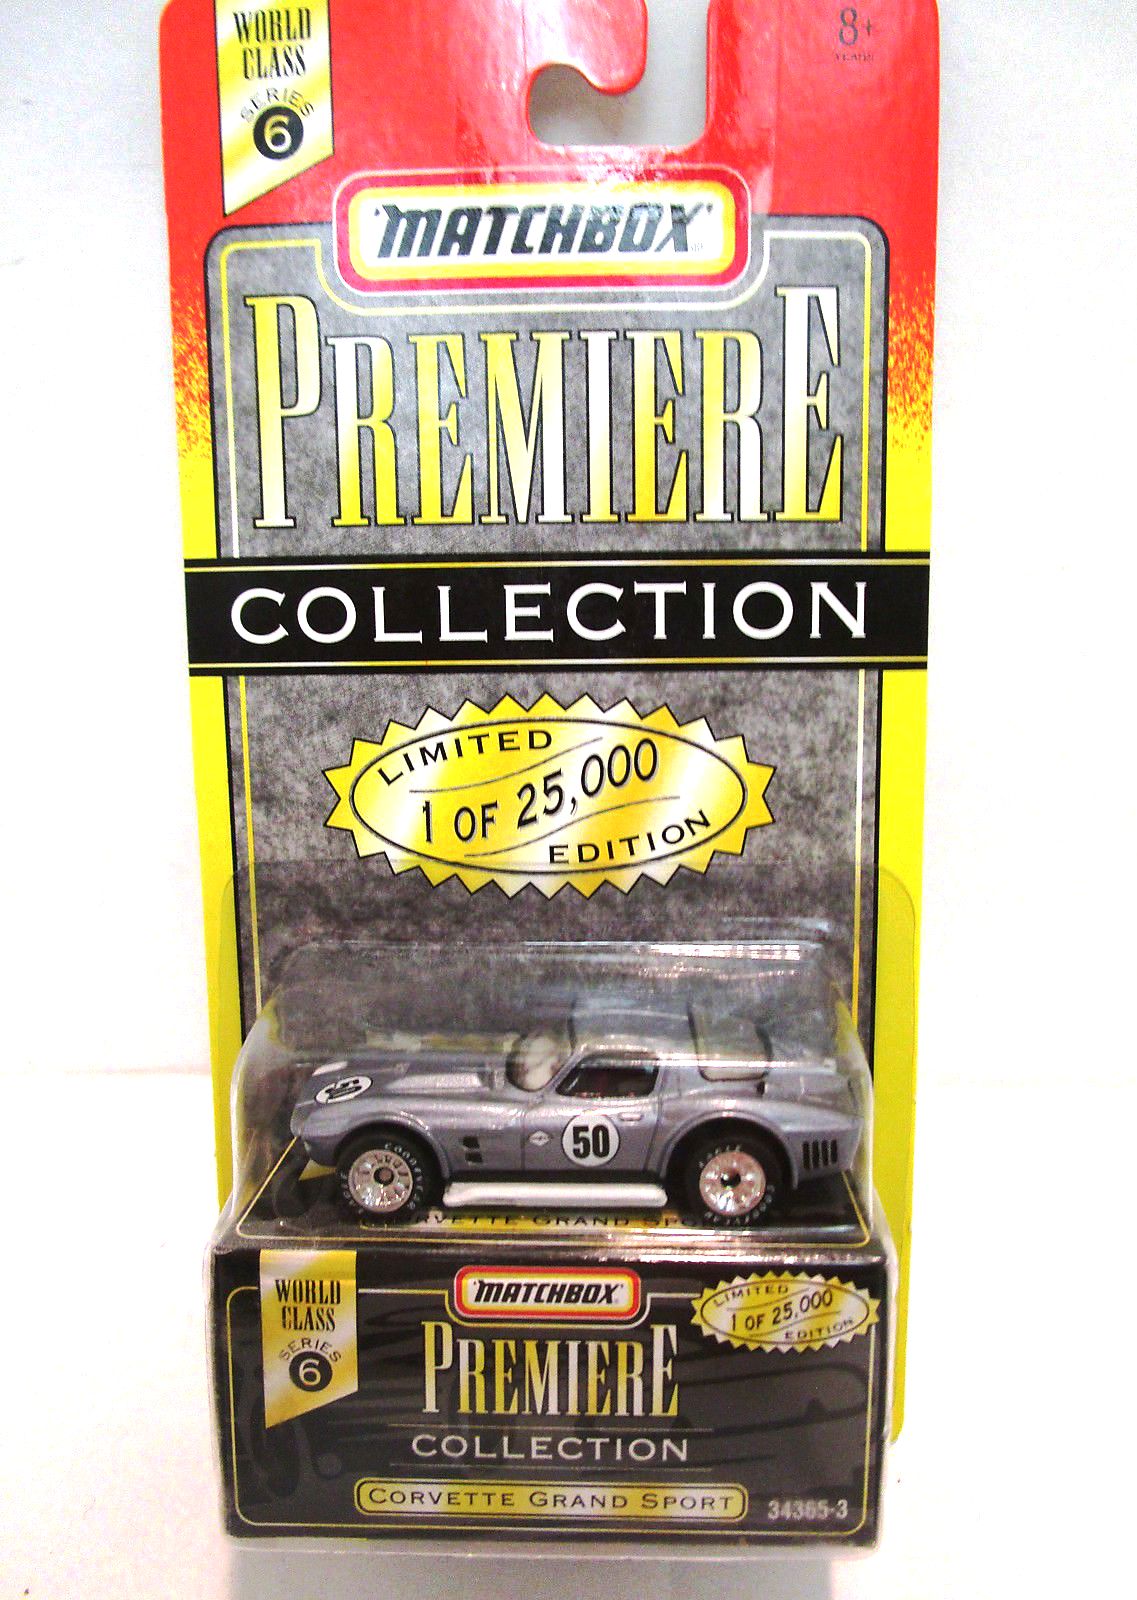 Matchbox Series 3 Premiere Collection 1995 World Class Diecast for sale online 